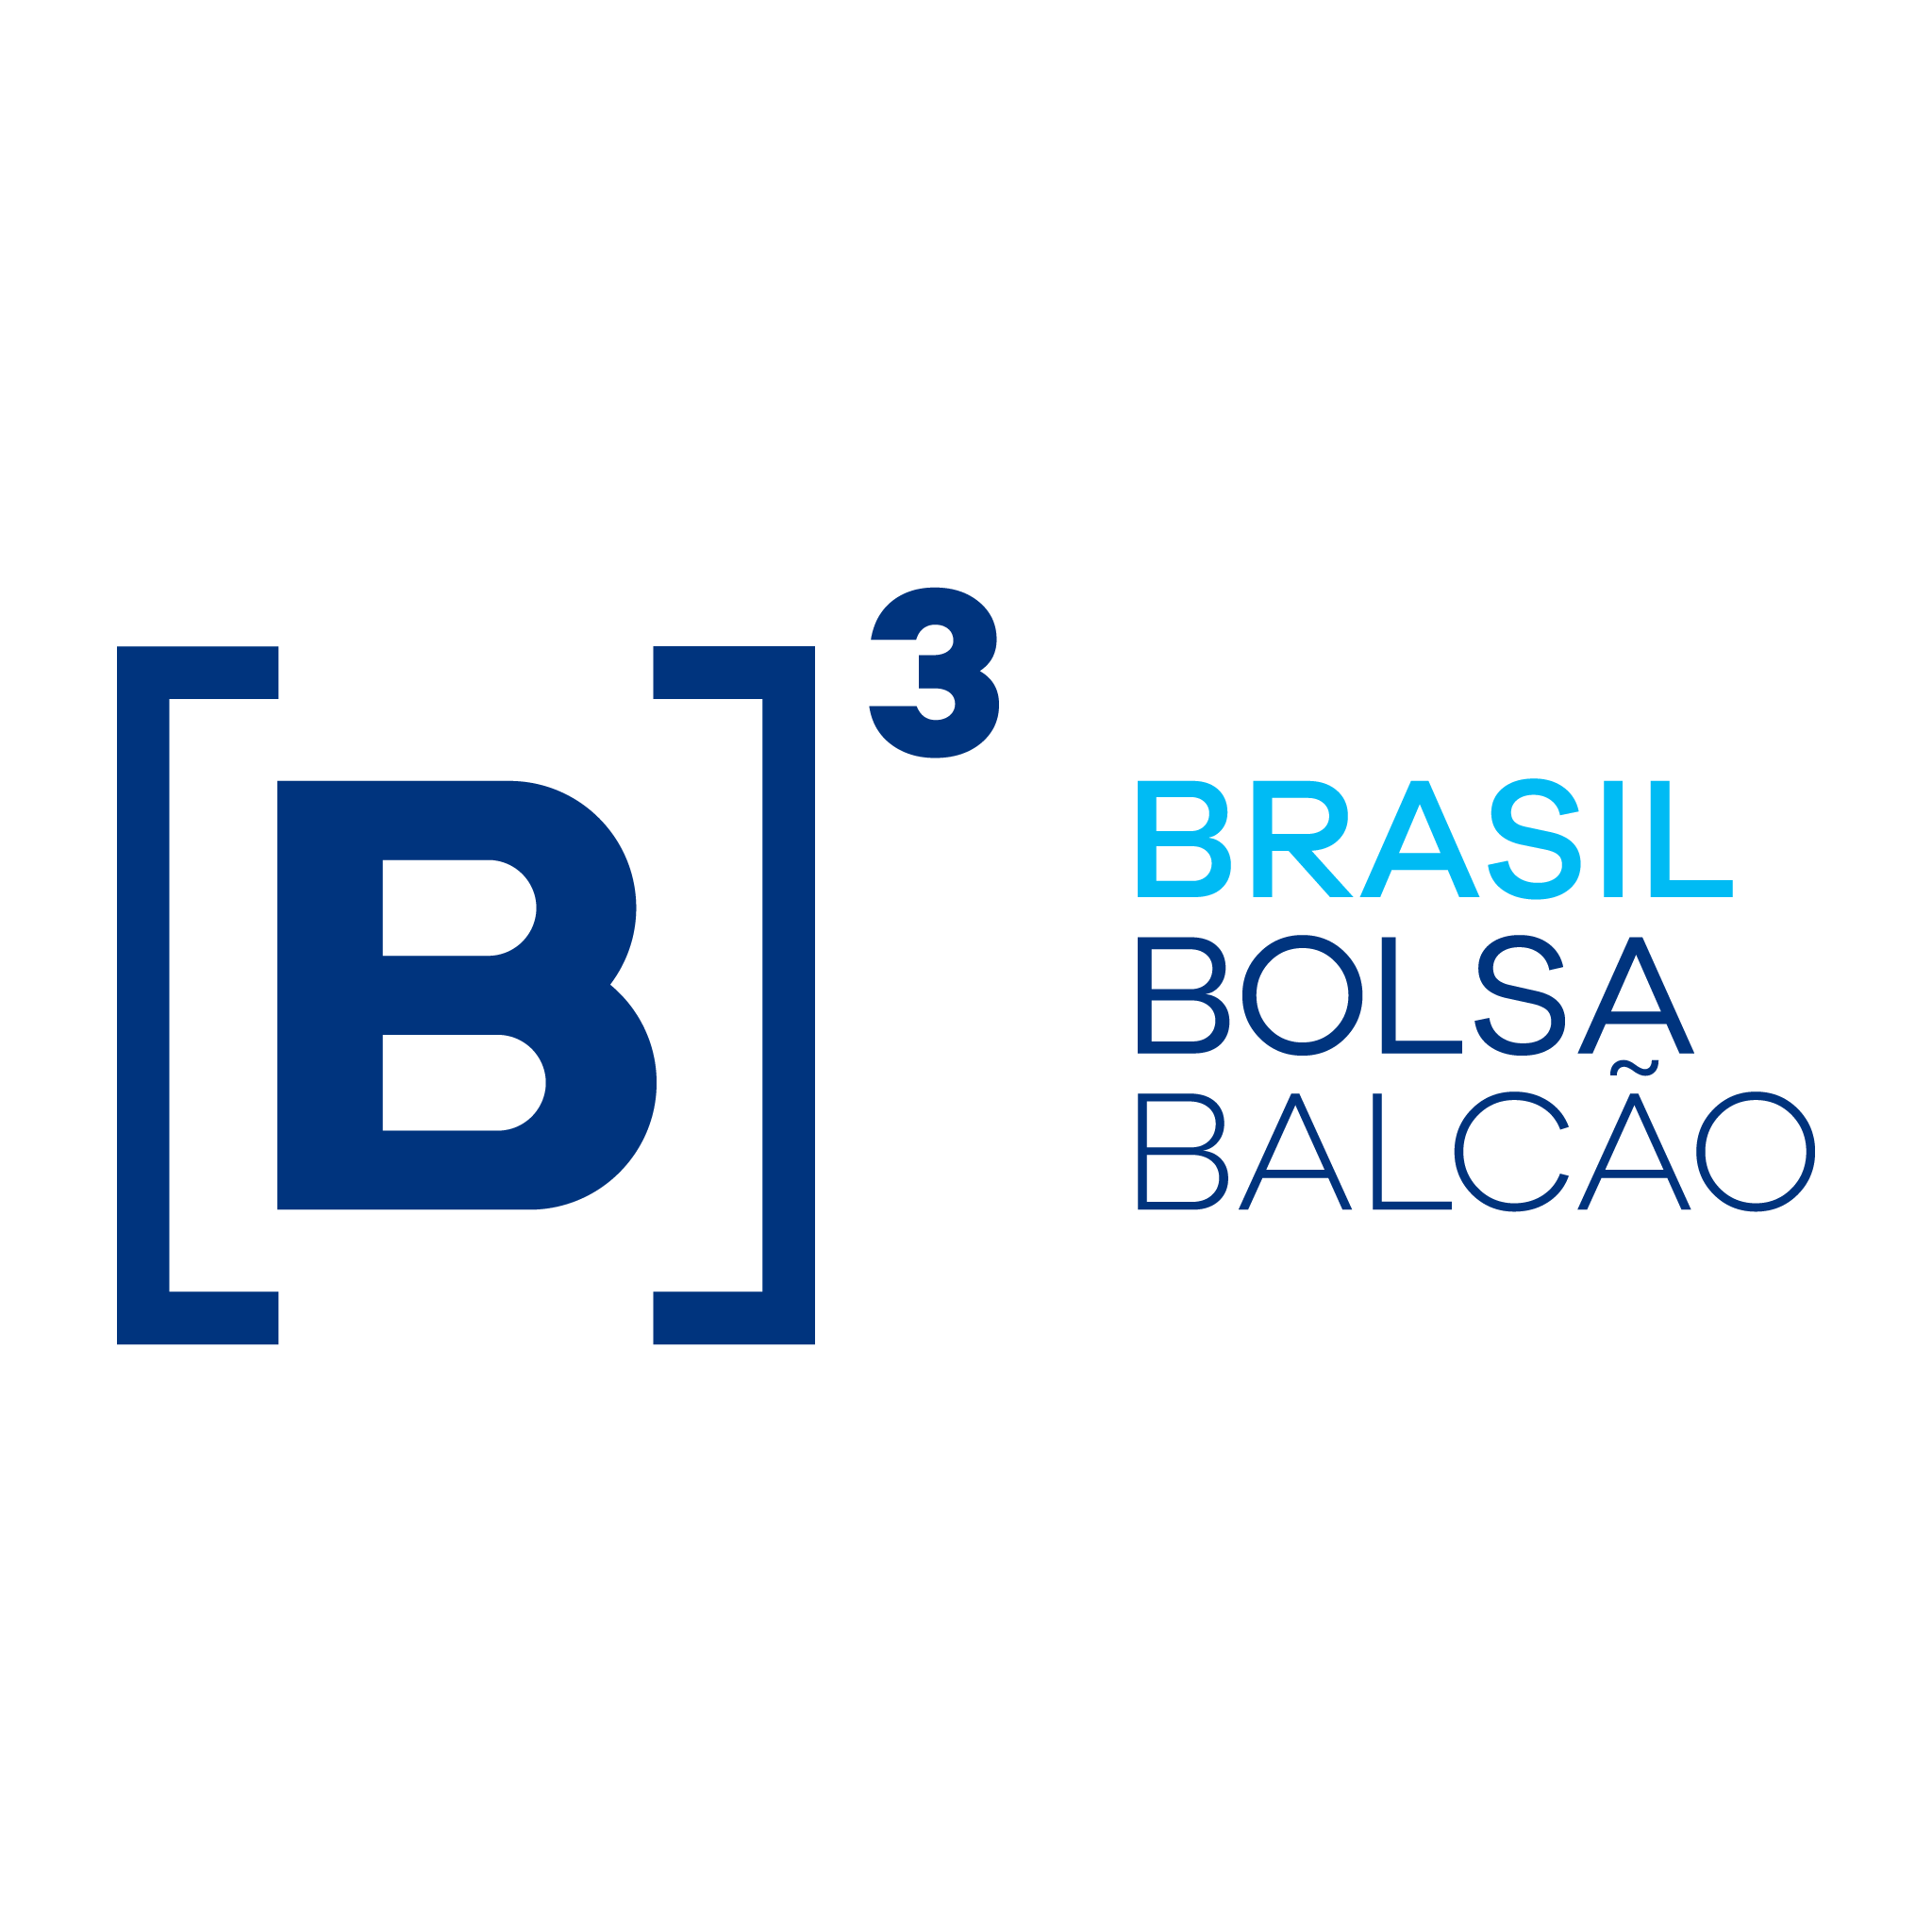 brasao do b3 brasil bolsa balcao